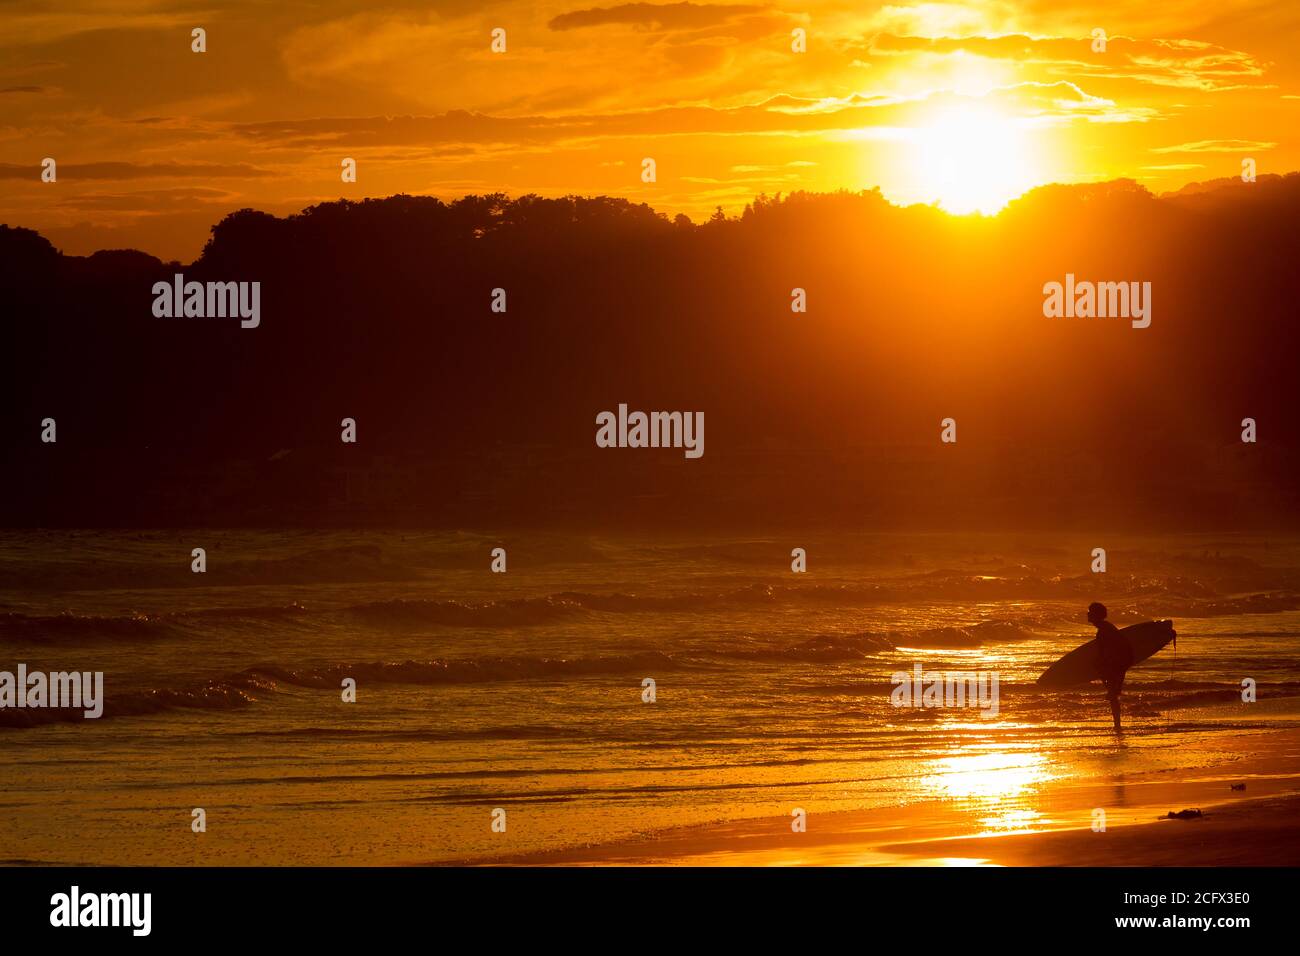 A surfer stands on a beach looking at the waves as the sun sets behind, Kamakura beach, Kanagawa, Japan. Stock Photo